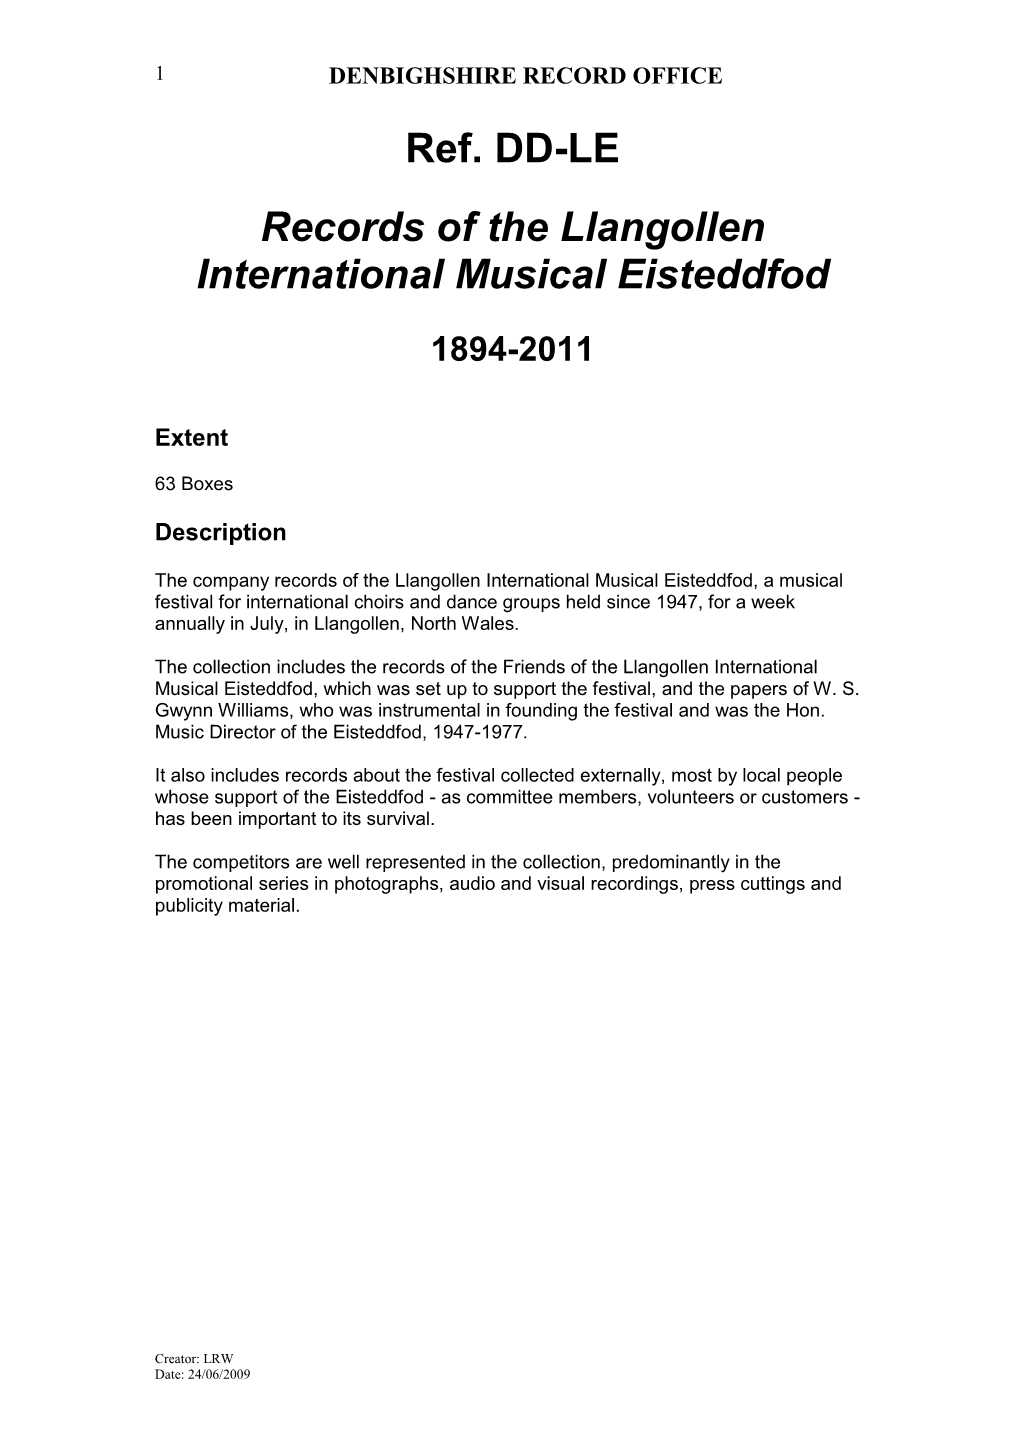 Ref. DD-LE Records of the Llangollen International Musical Eisteddfod